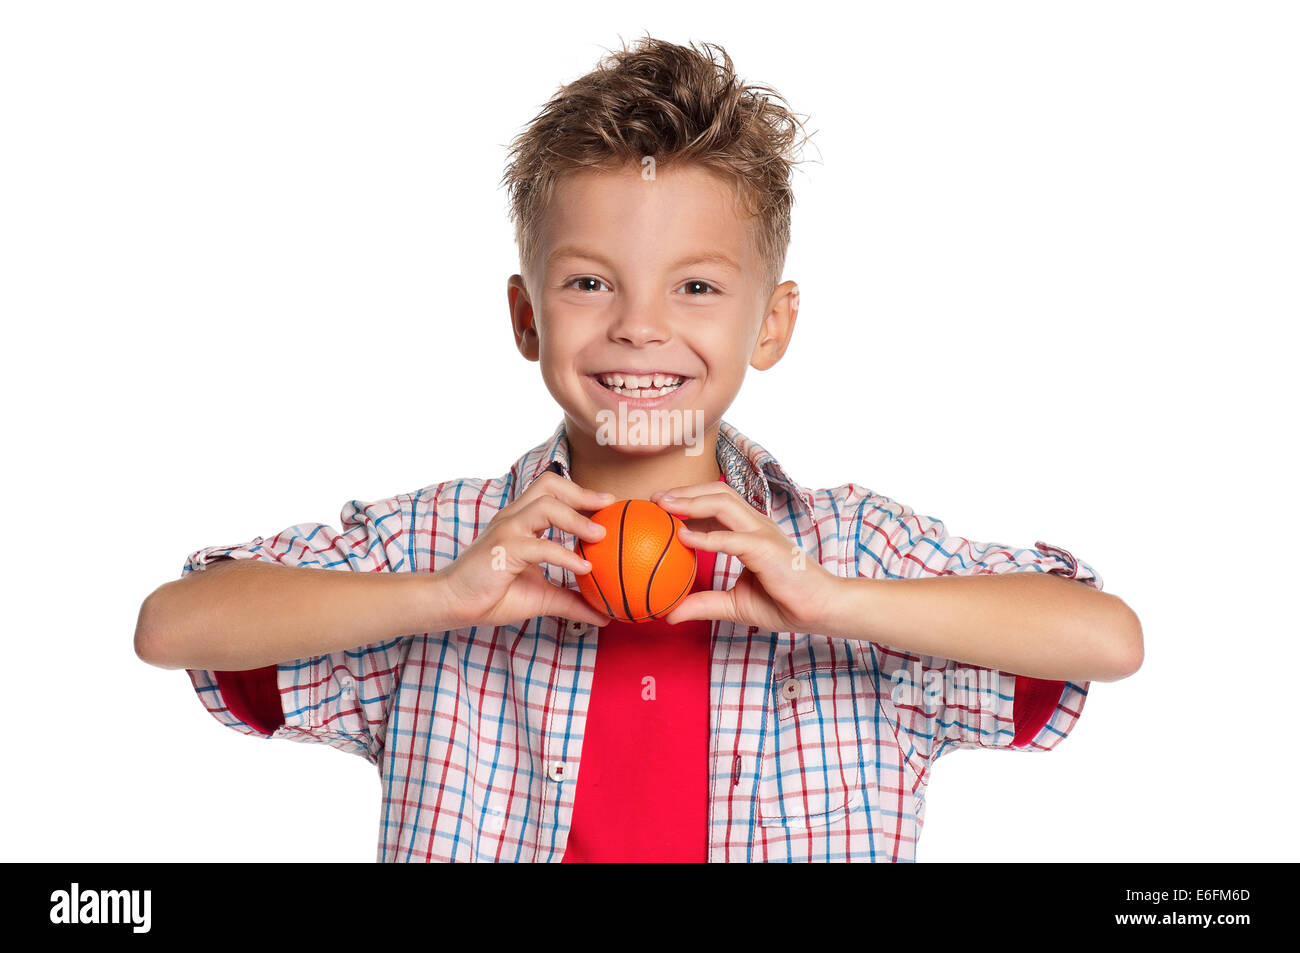 Boy with basketball ball Stock Photo